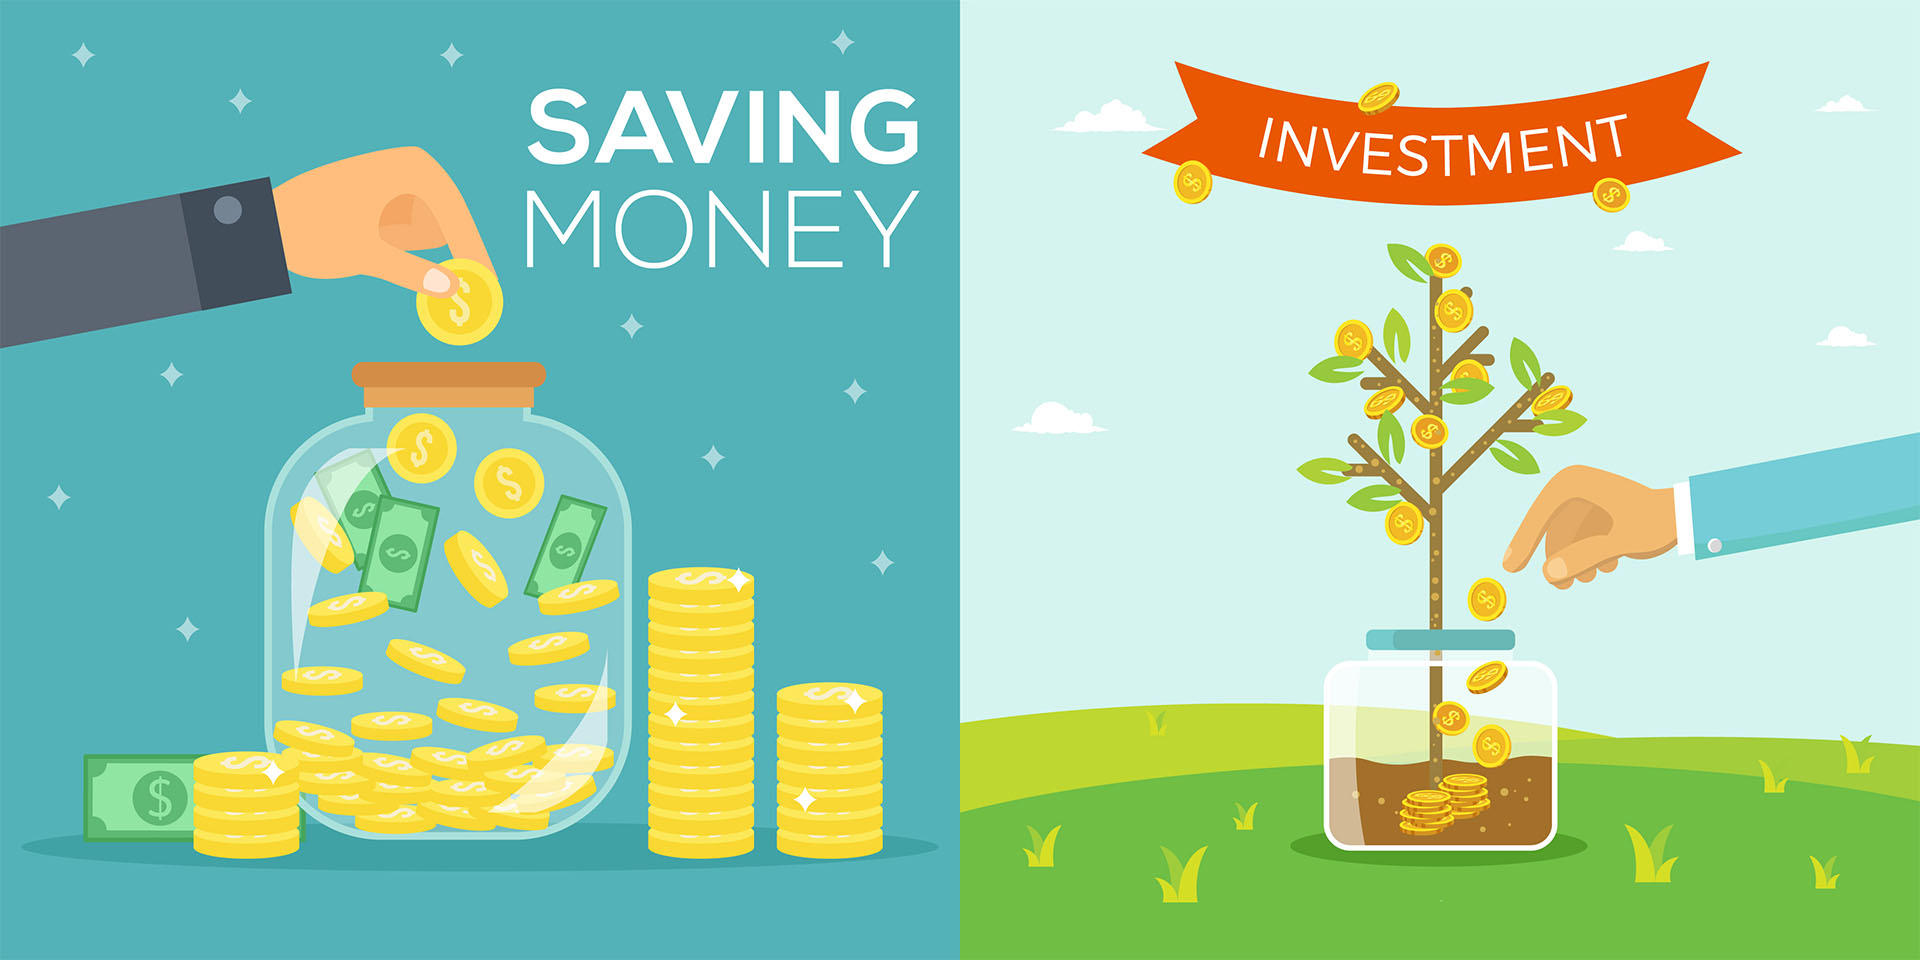 Investing and Saving